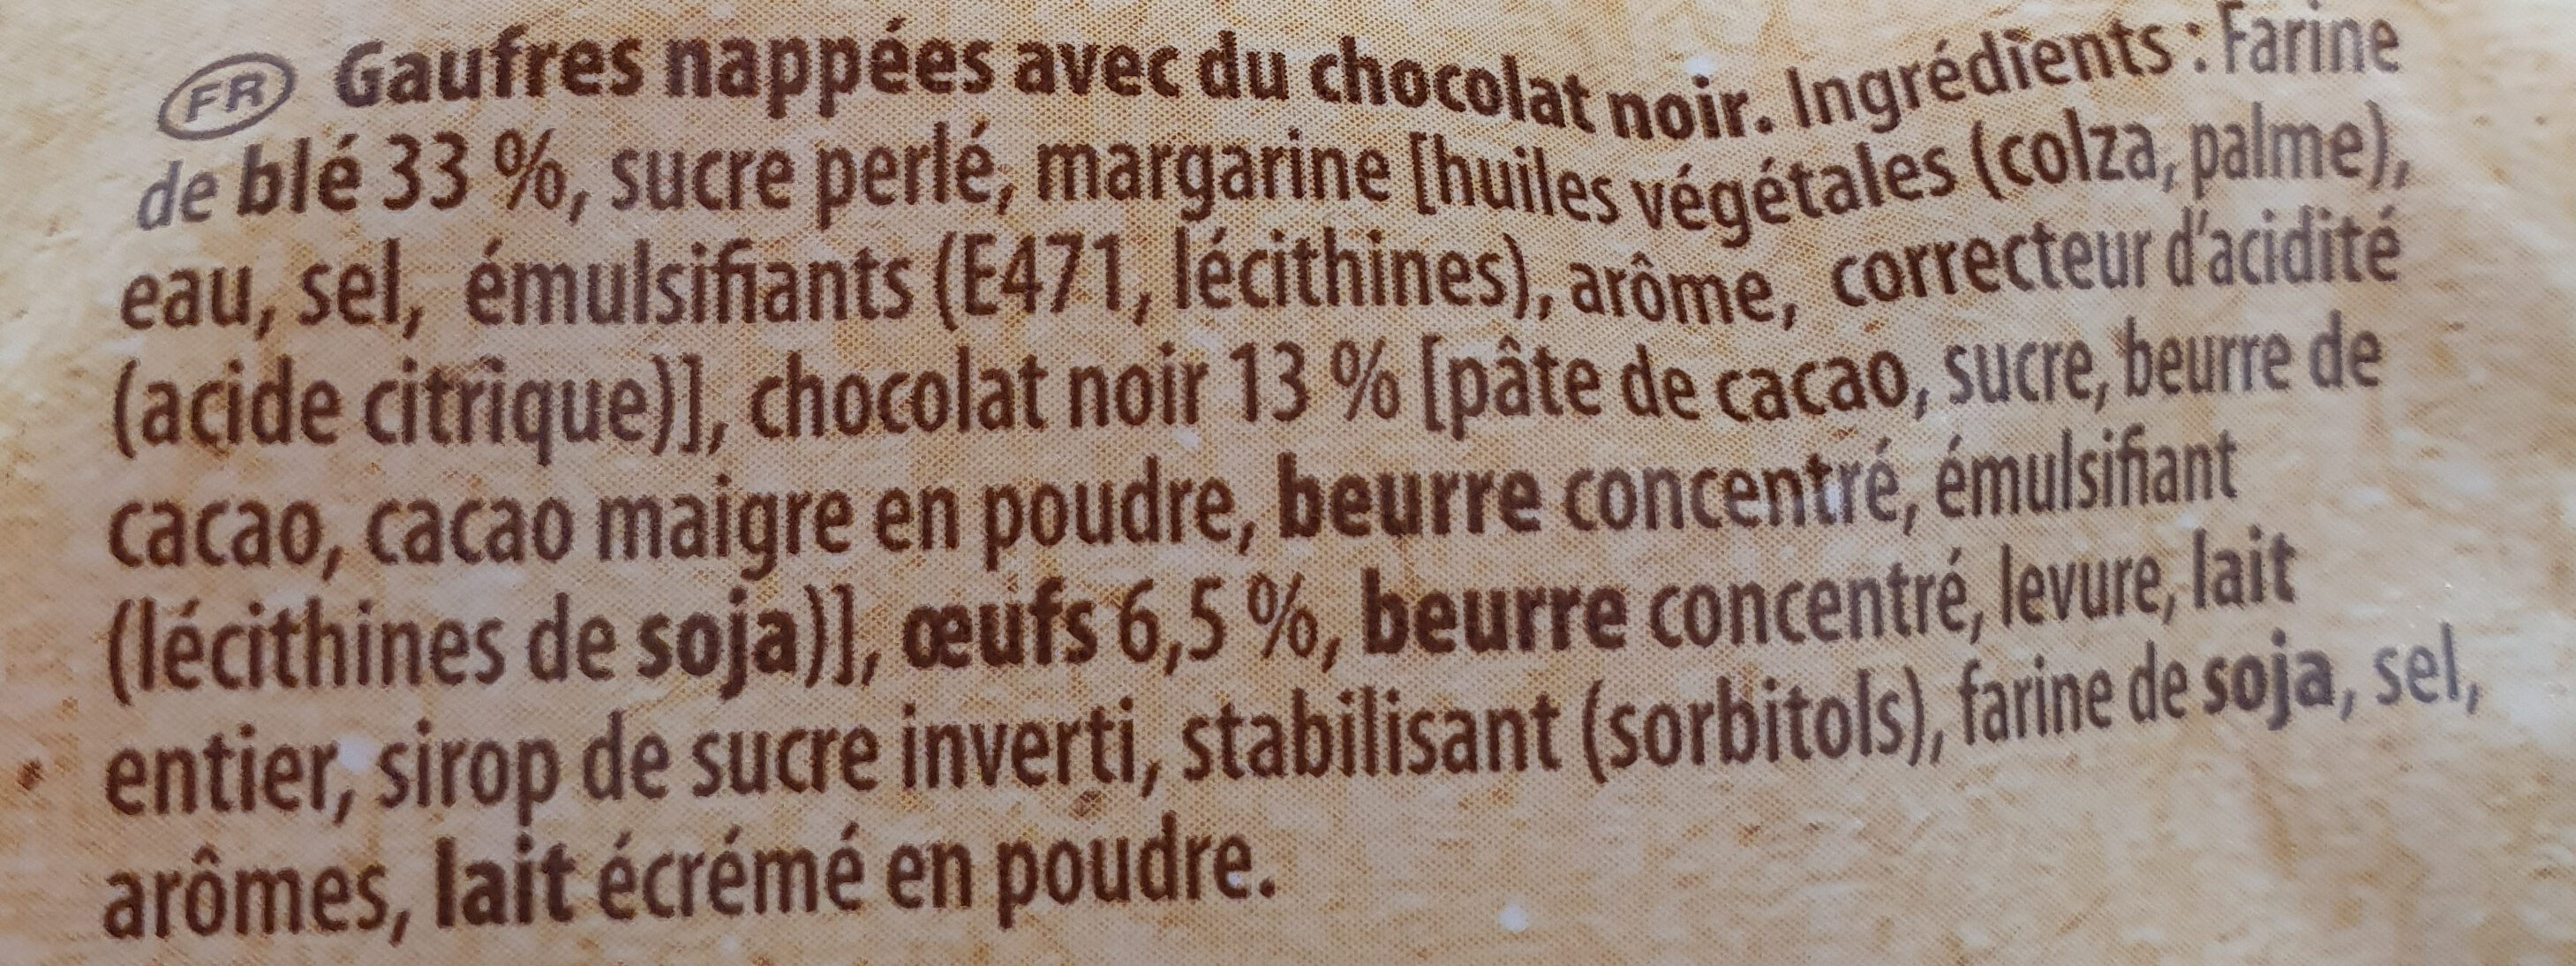 La Gaufre - chocolat noir 70% cacao - Ingredienser - fr